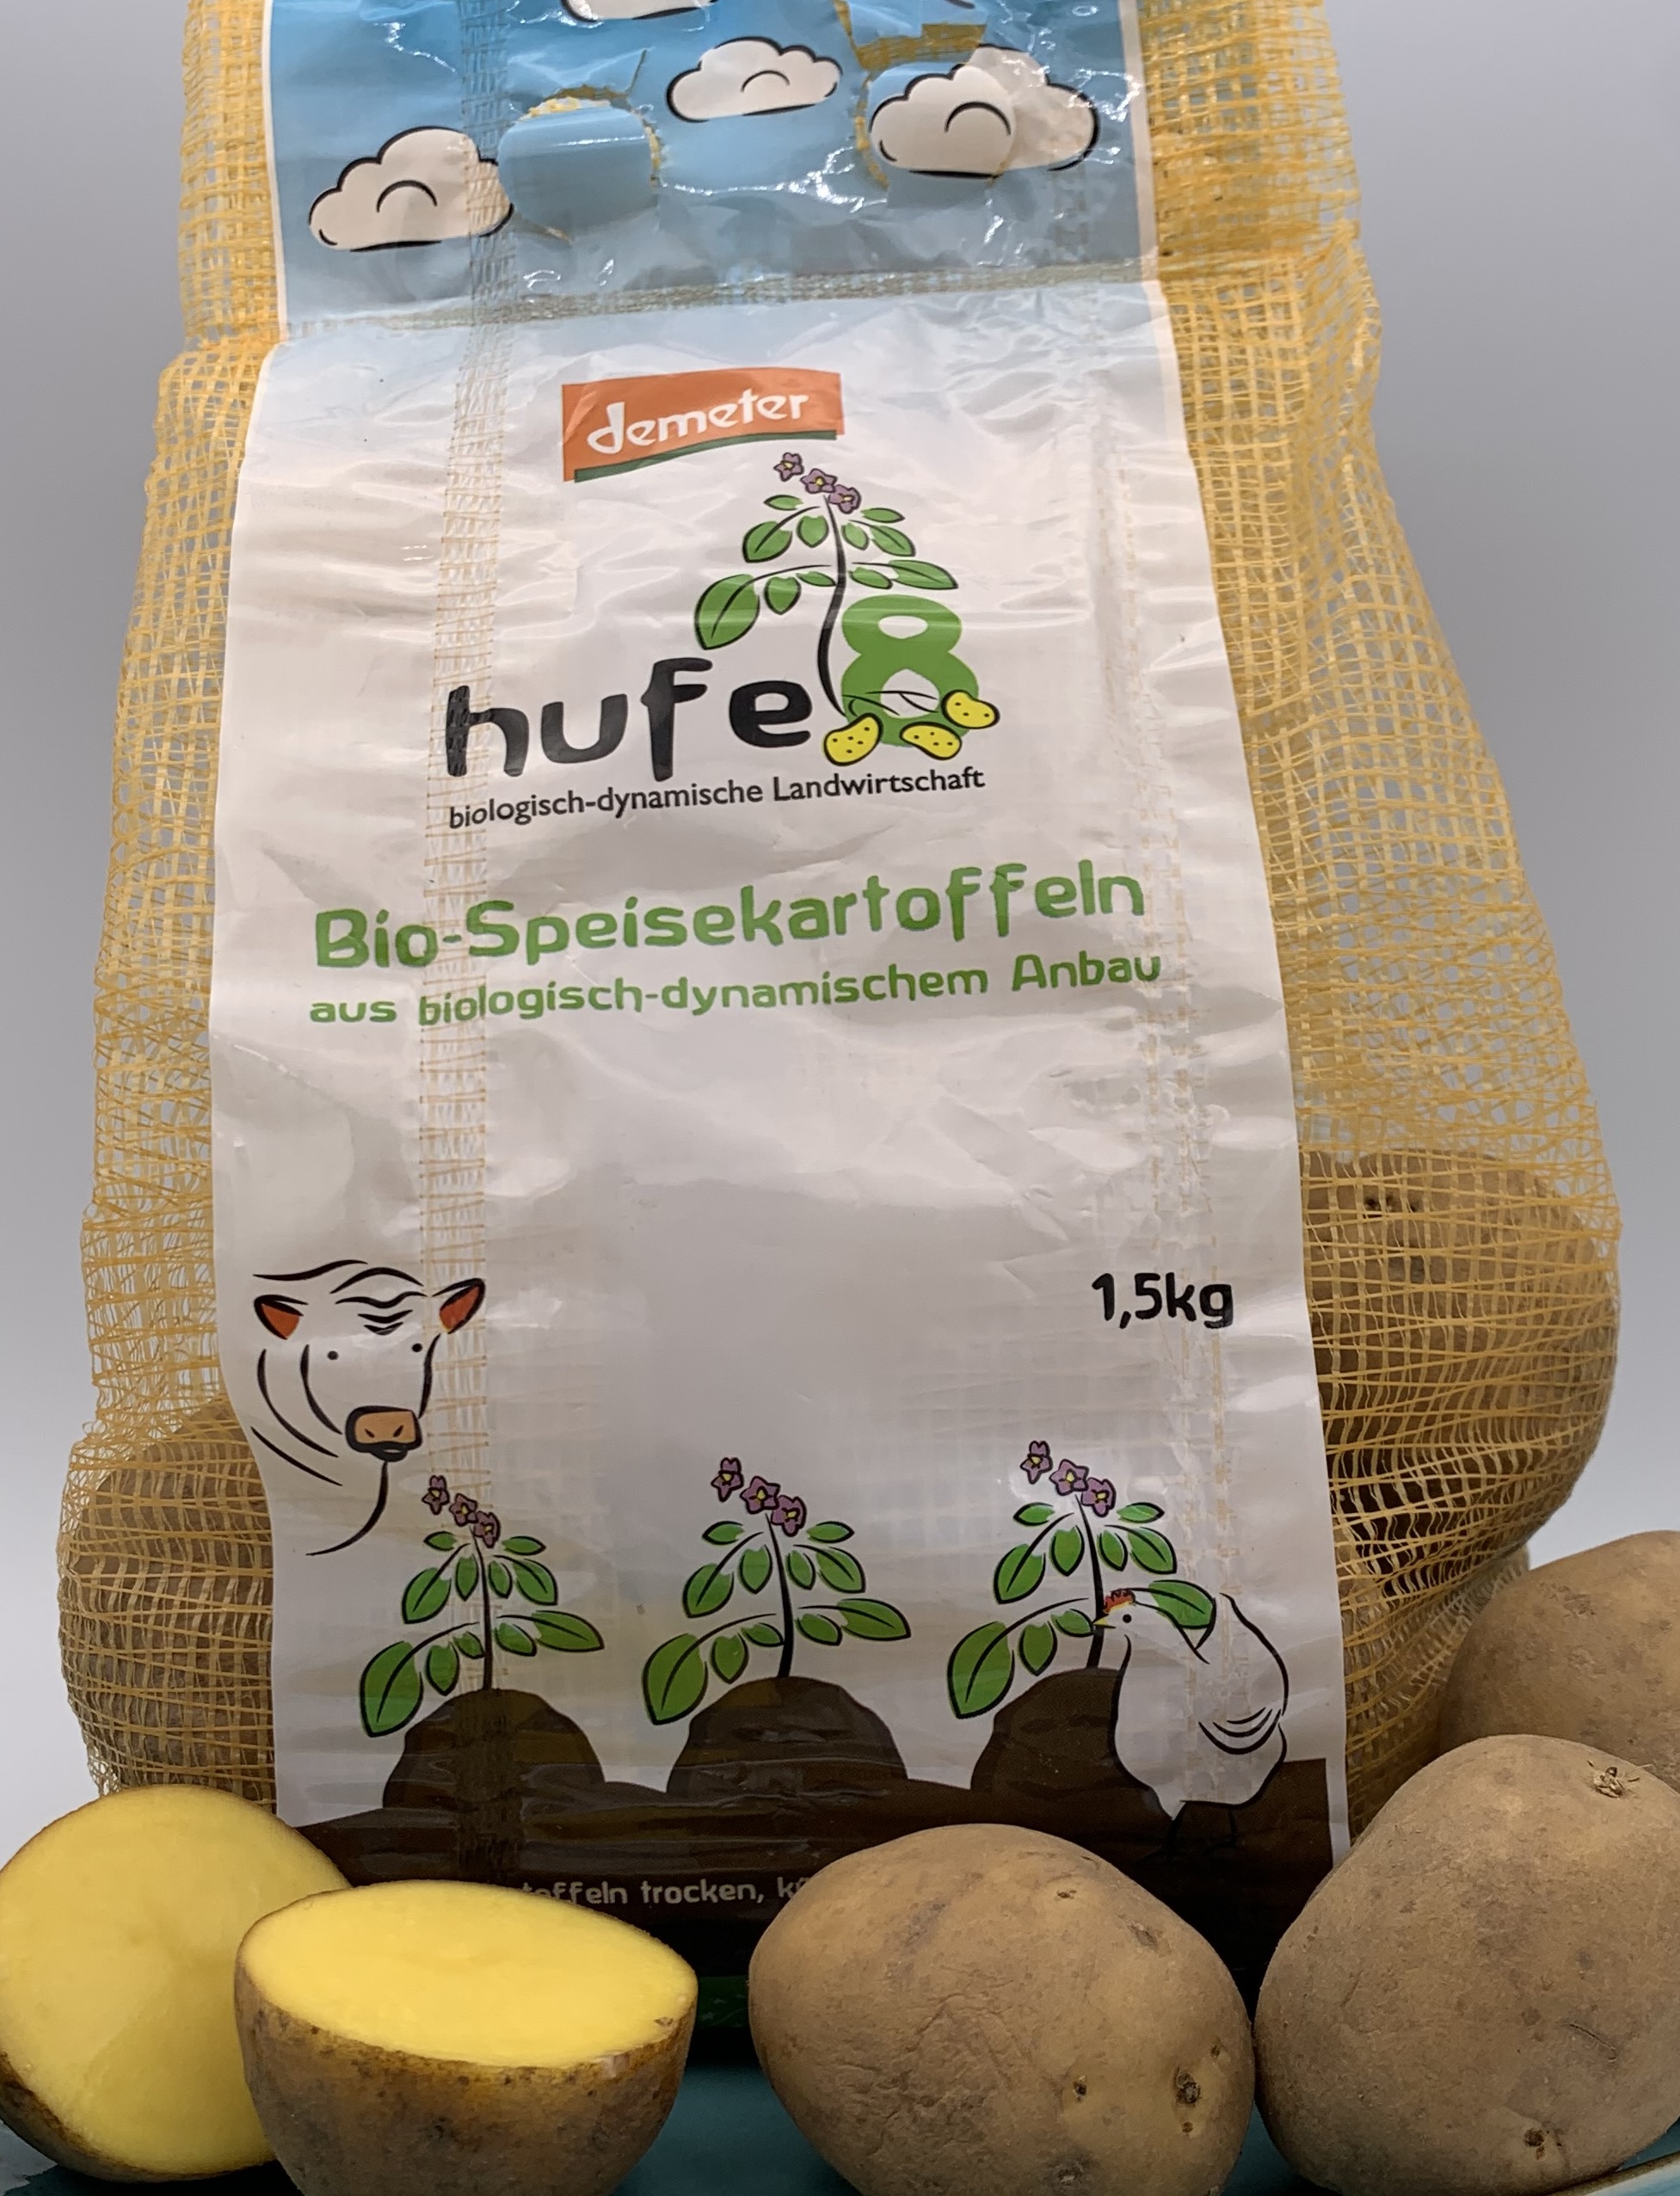 1,5kg | Acker Hufe8 | Kartoffeln Kartoffeln | Onlineshop